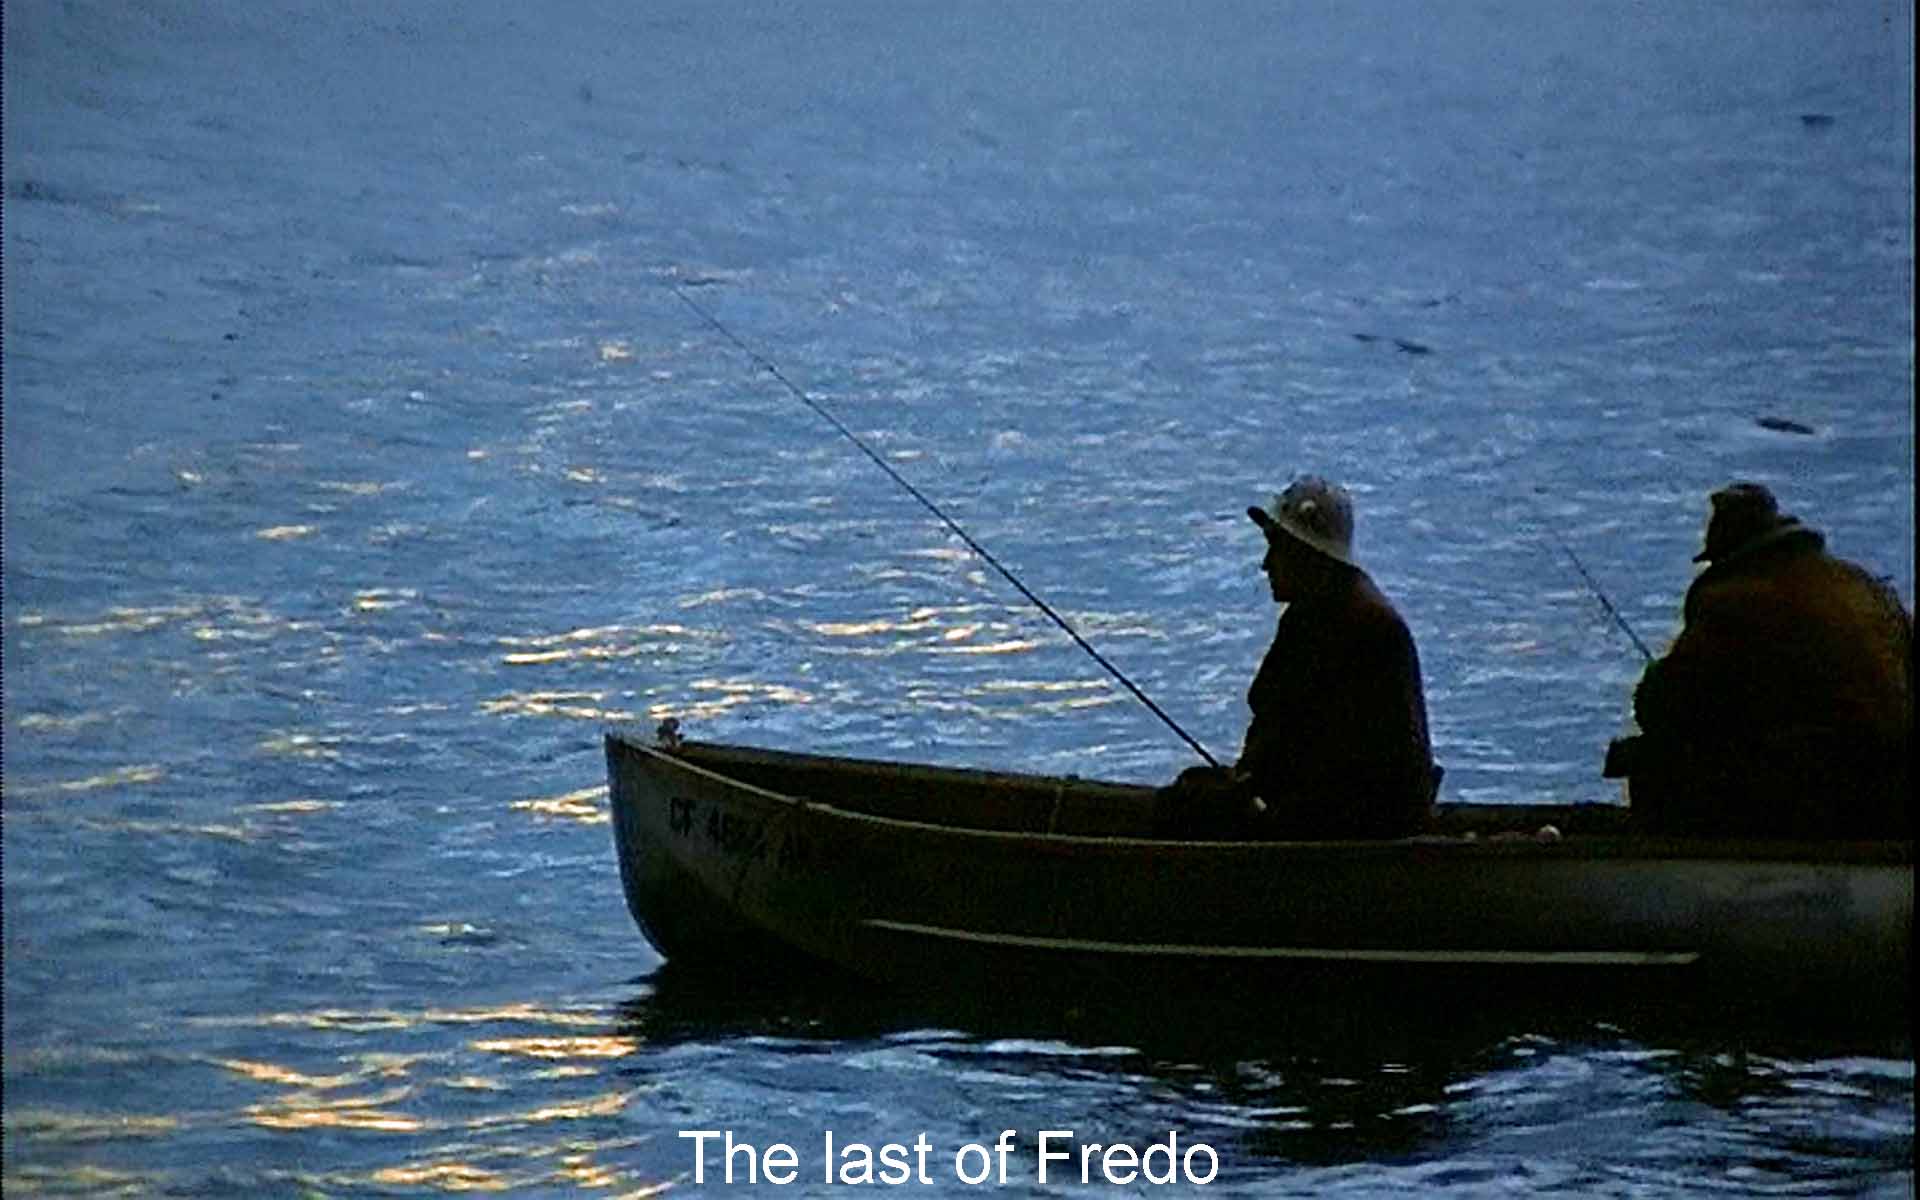 The last of Fredo